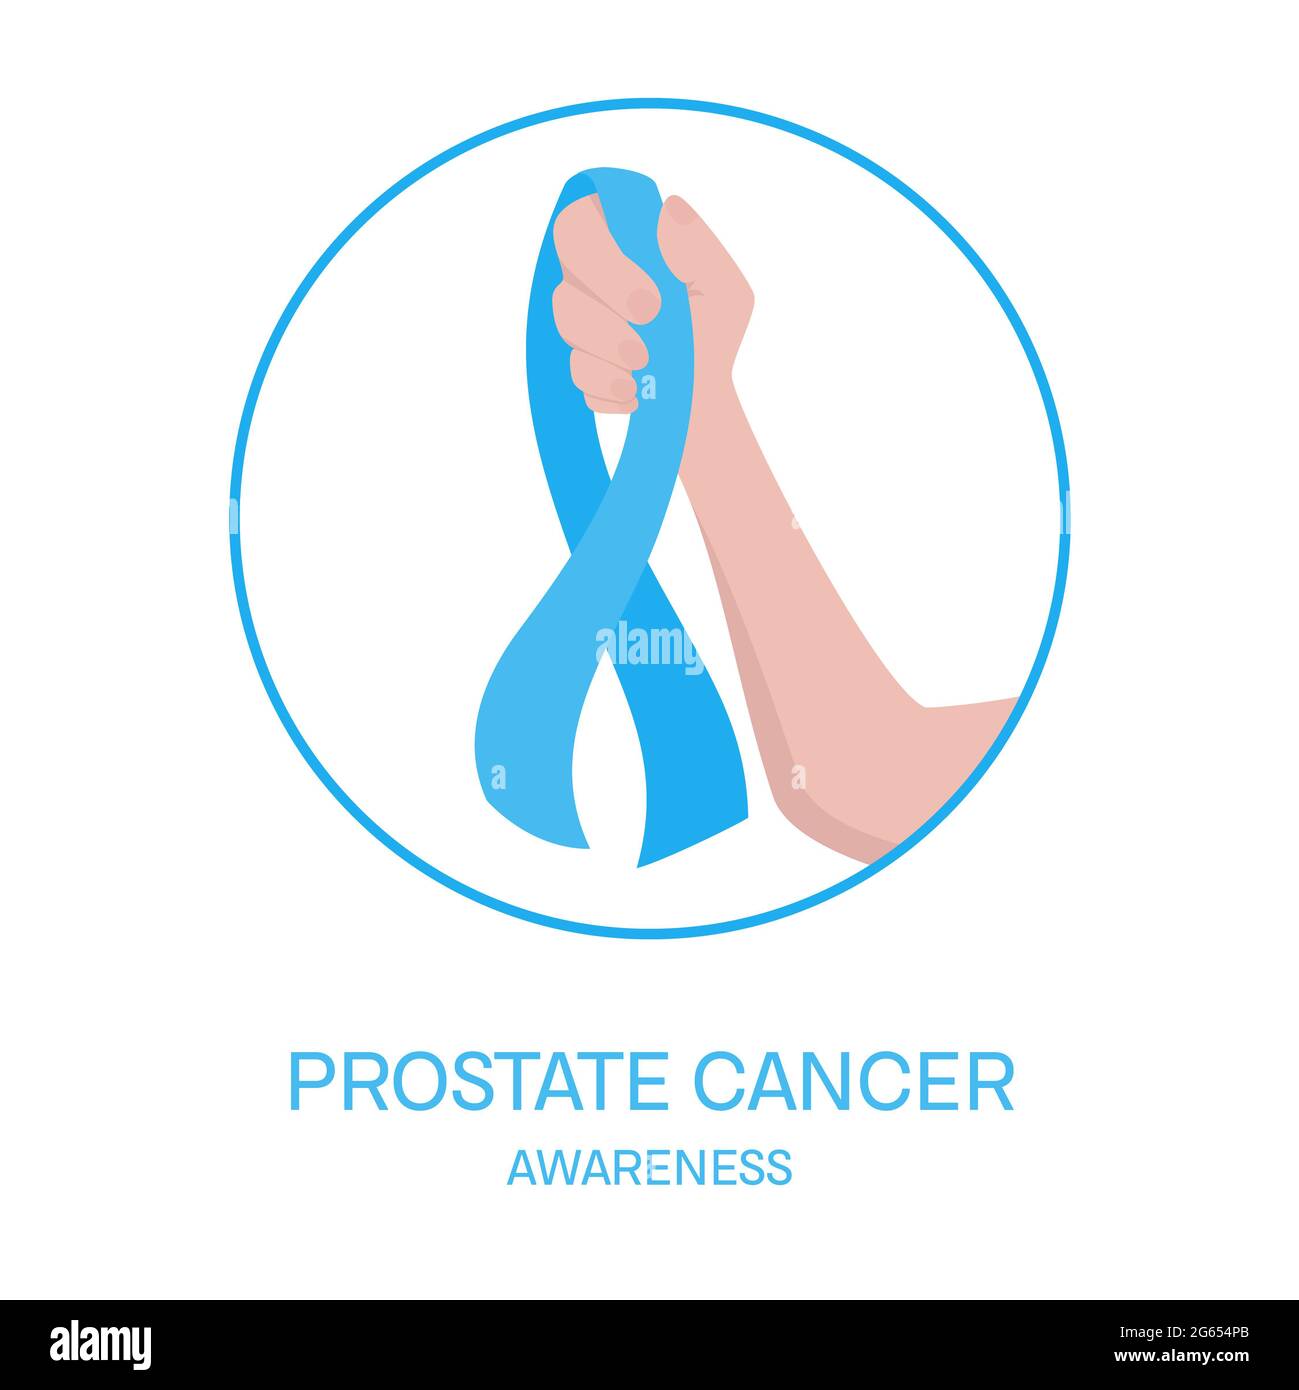 Prostate Cancer Awareness Conceptual Illustration Stock Photo Alamy